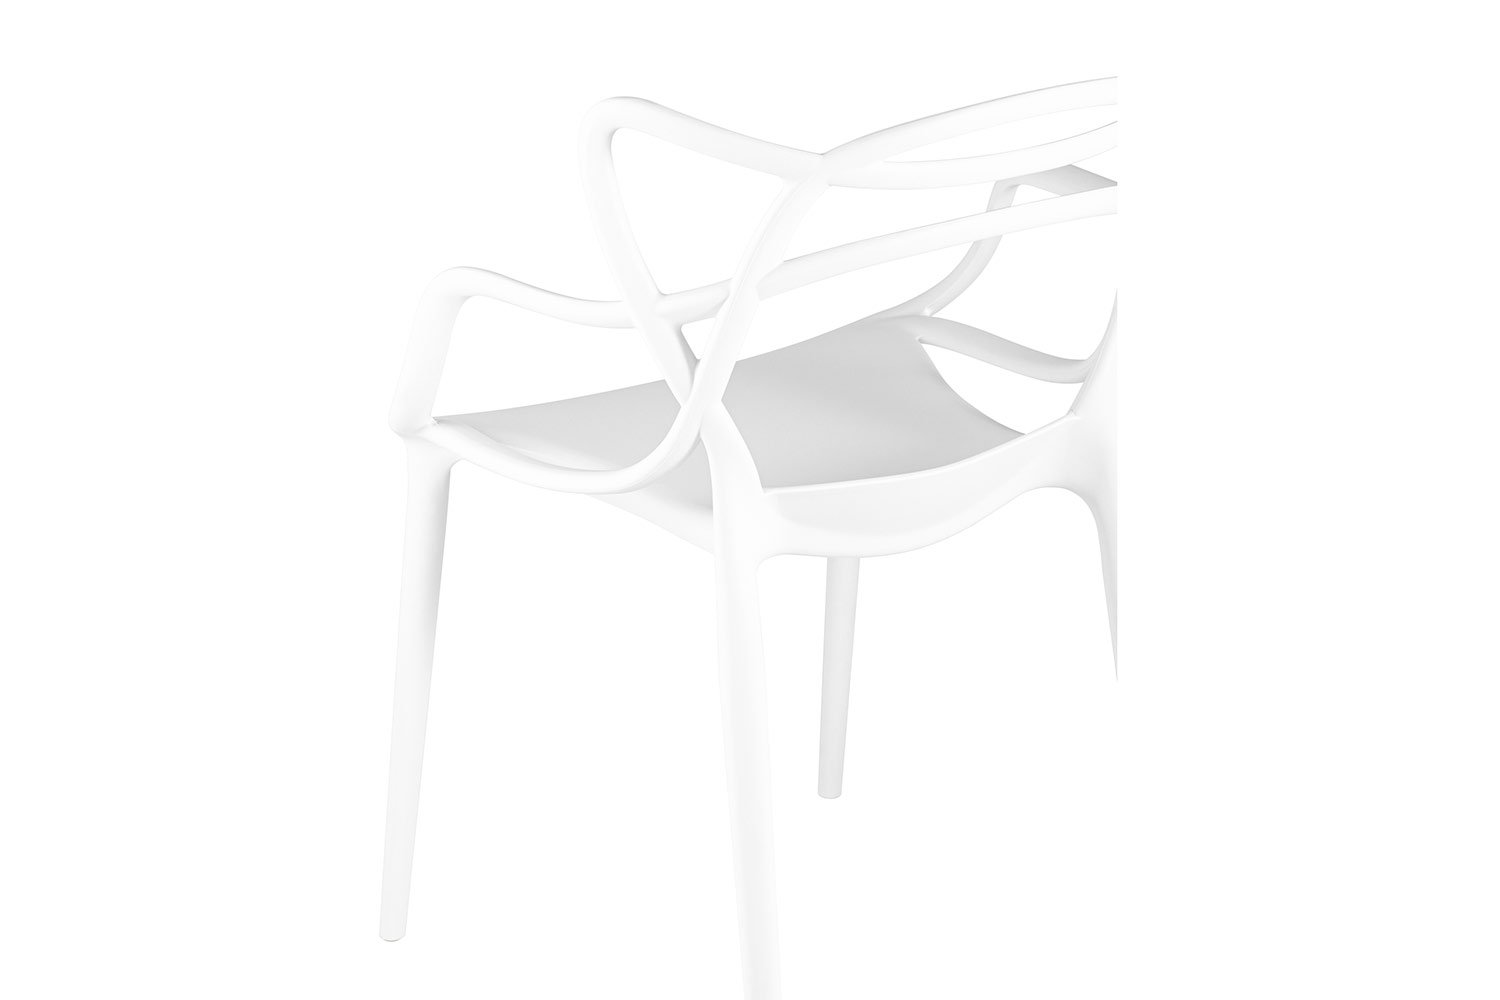 кресло пластиковое 59х55х82 см коричневое эльфпласт rodos